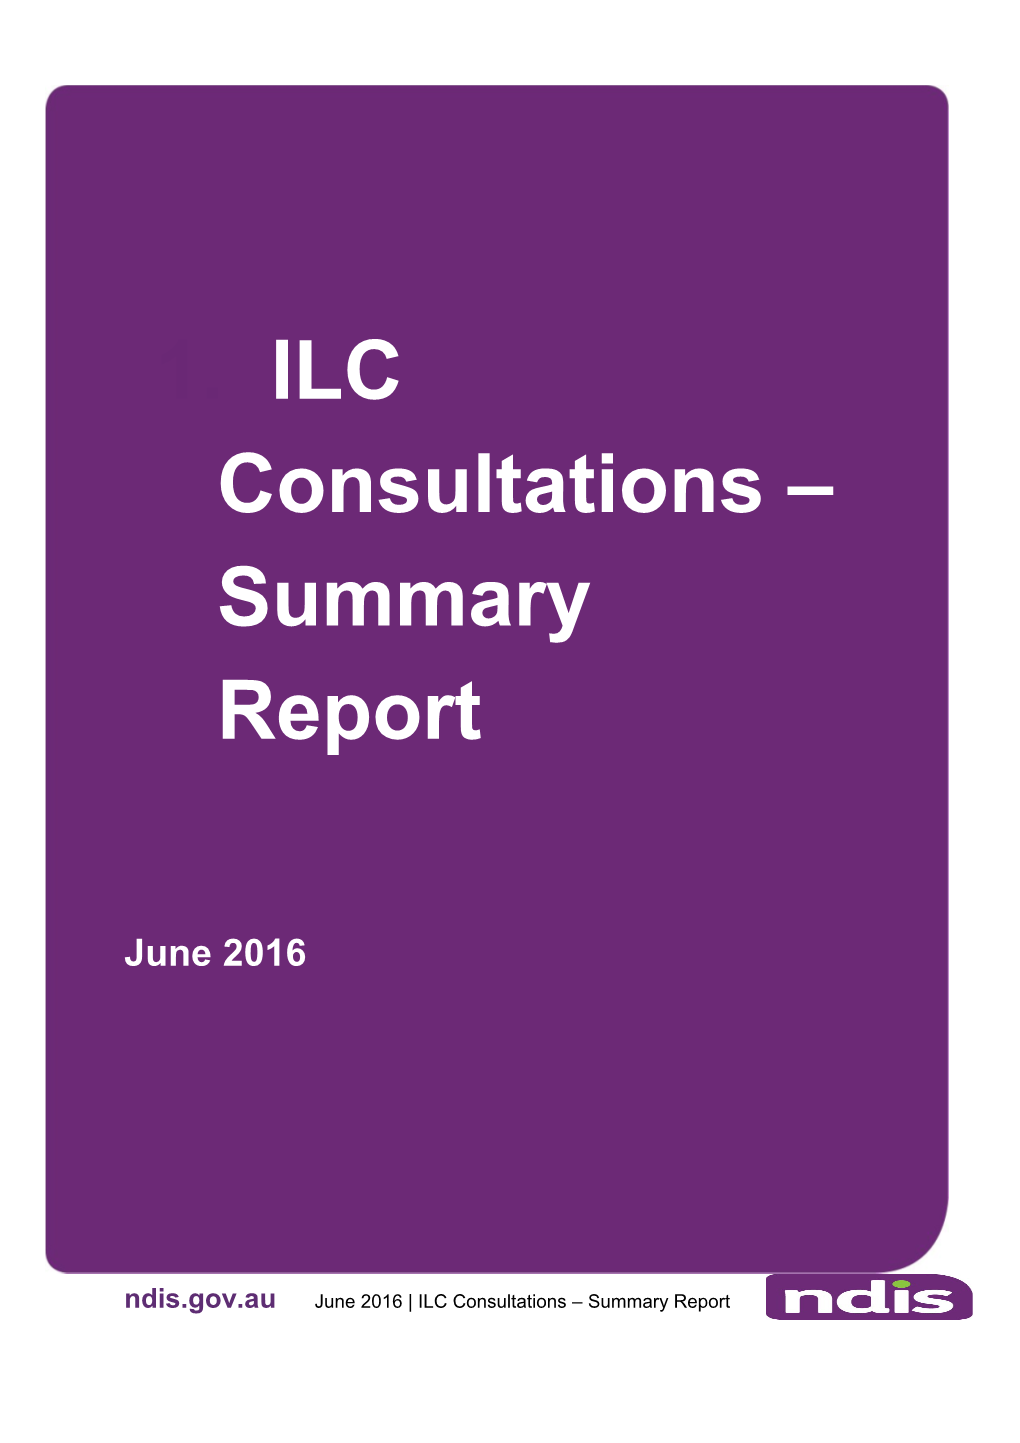 ILC Consultations Summary Report